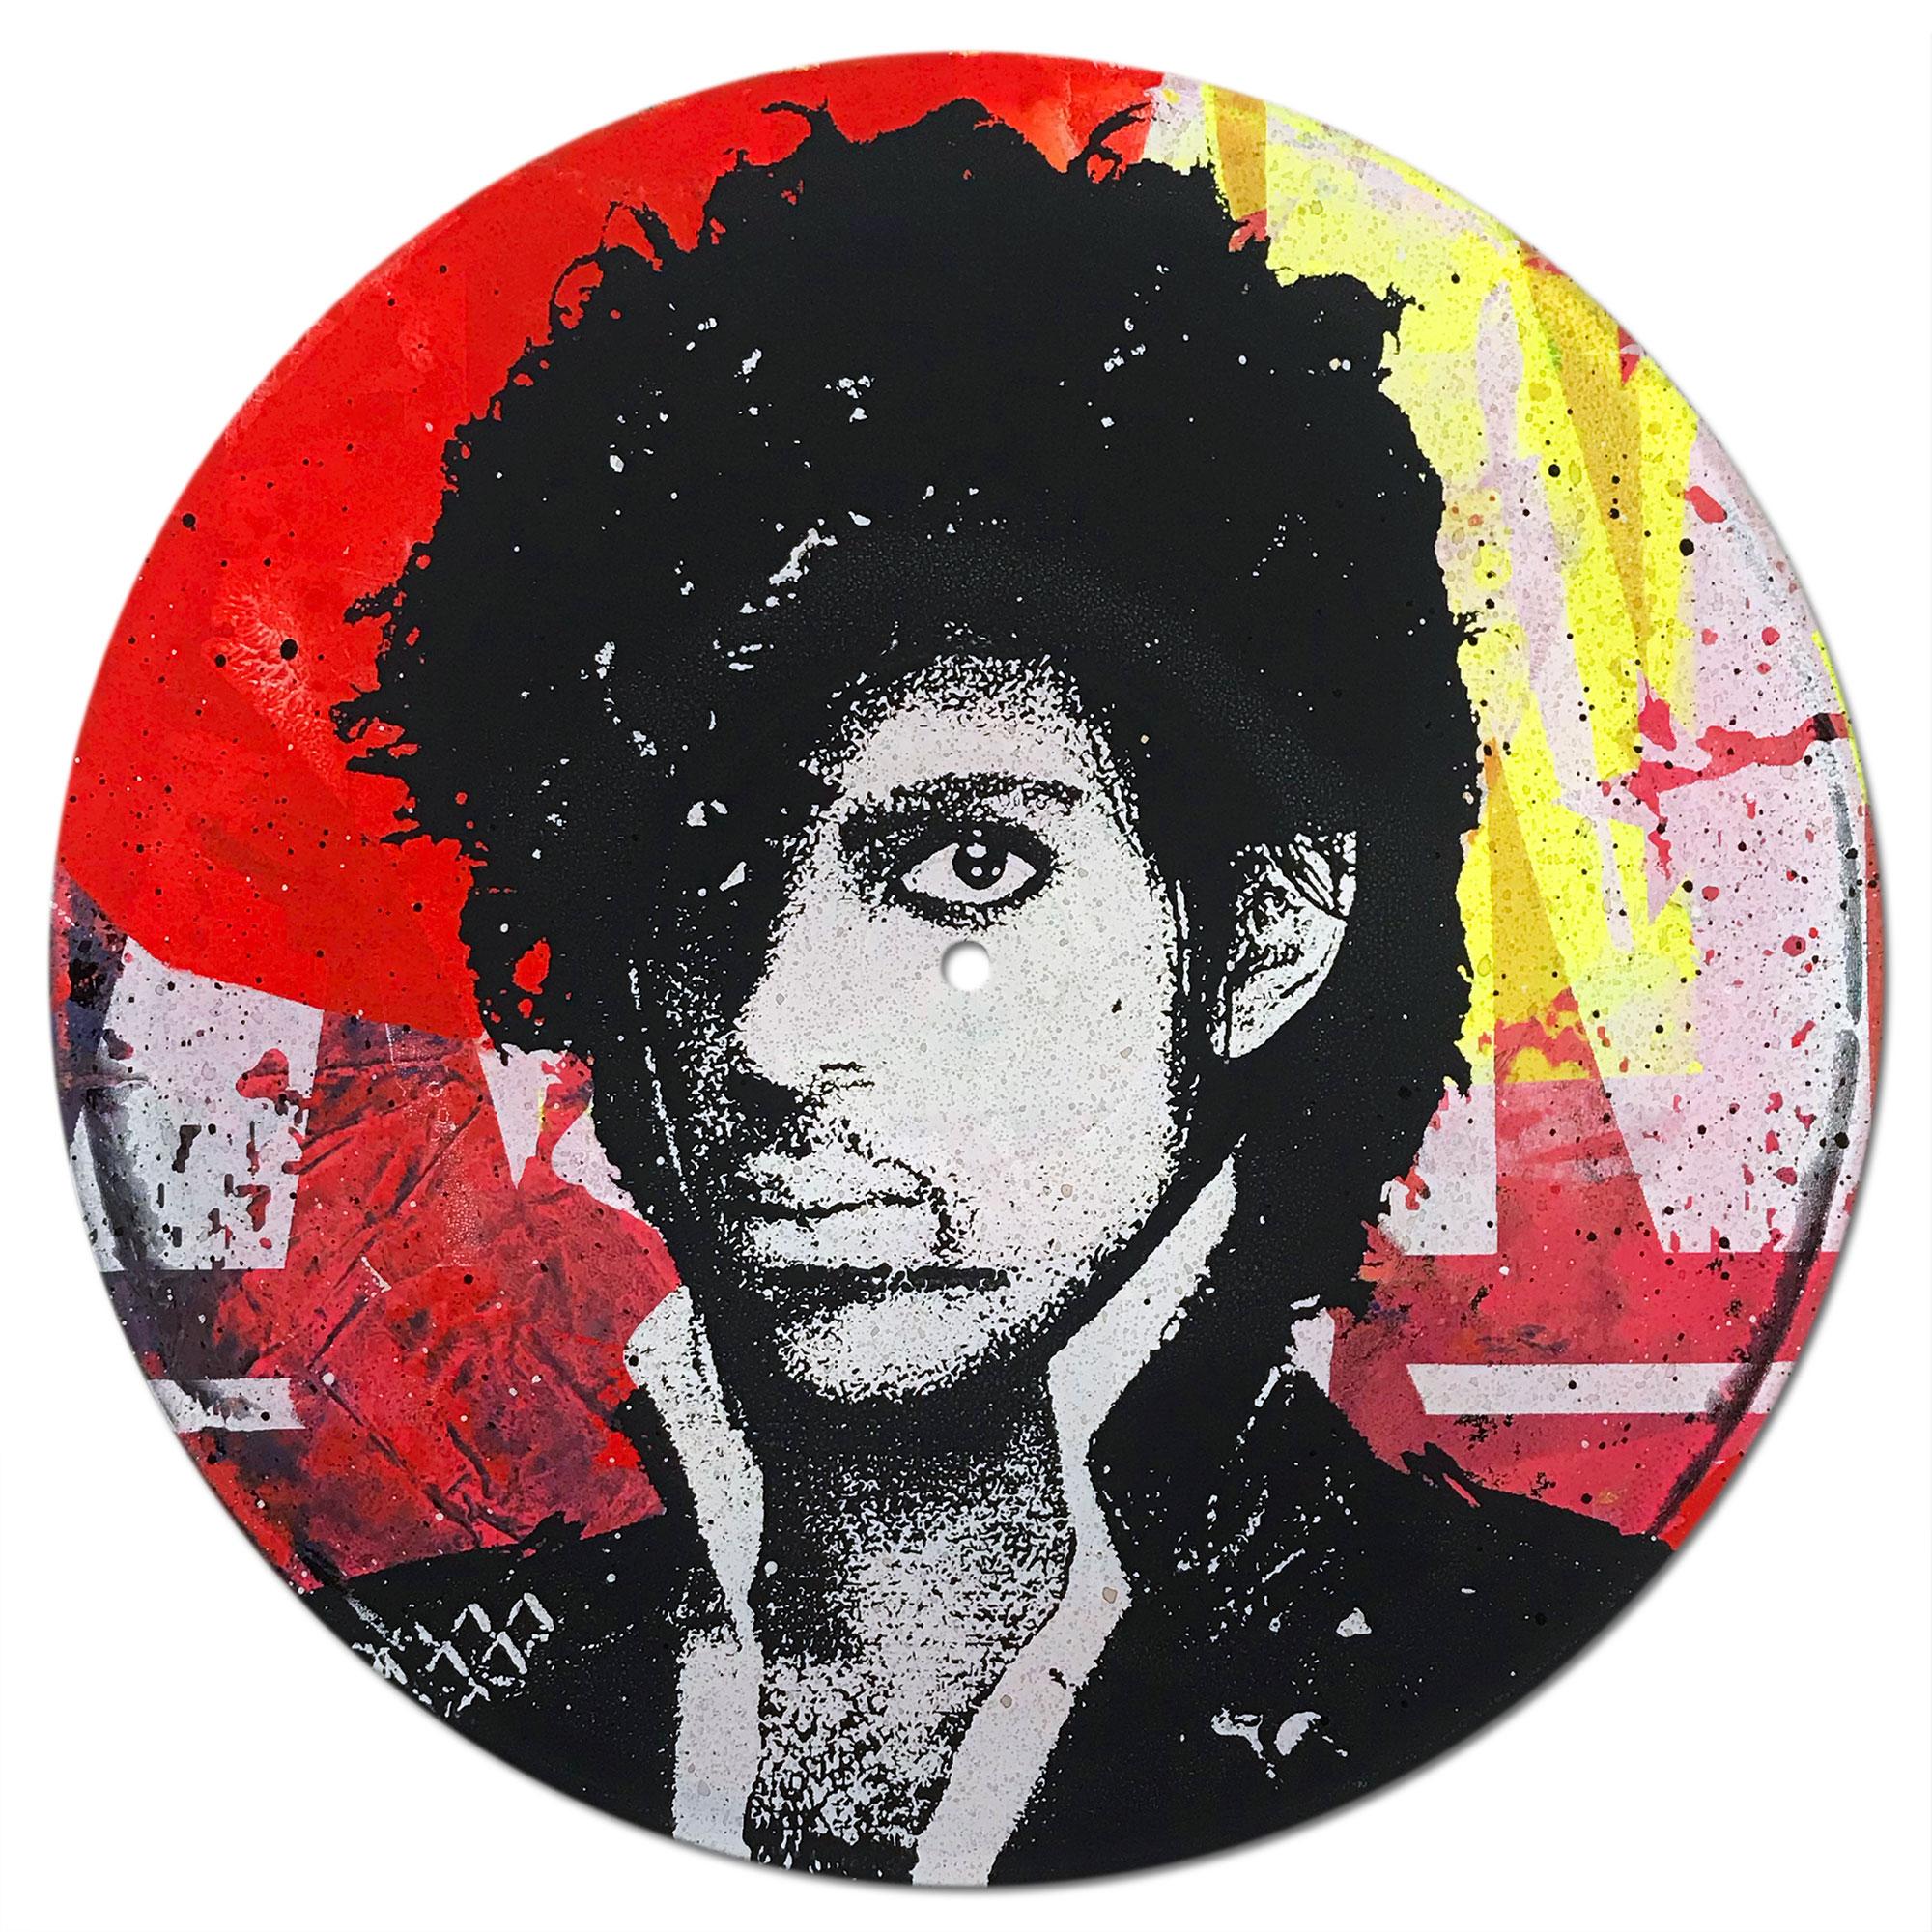 Prince Vinyl 1-7, Greg Gossel Pop Art LP Record Music (Singles & Sets Available) 2